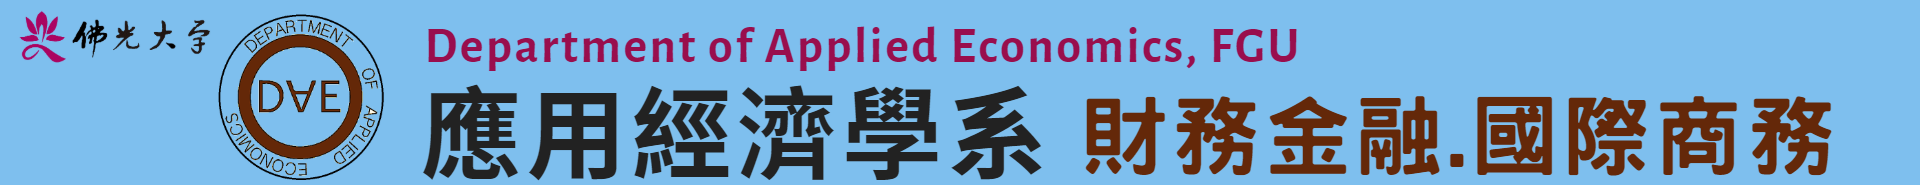 Department of Applied Economics,FGU  Logo